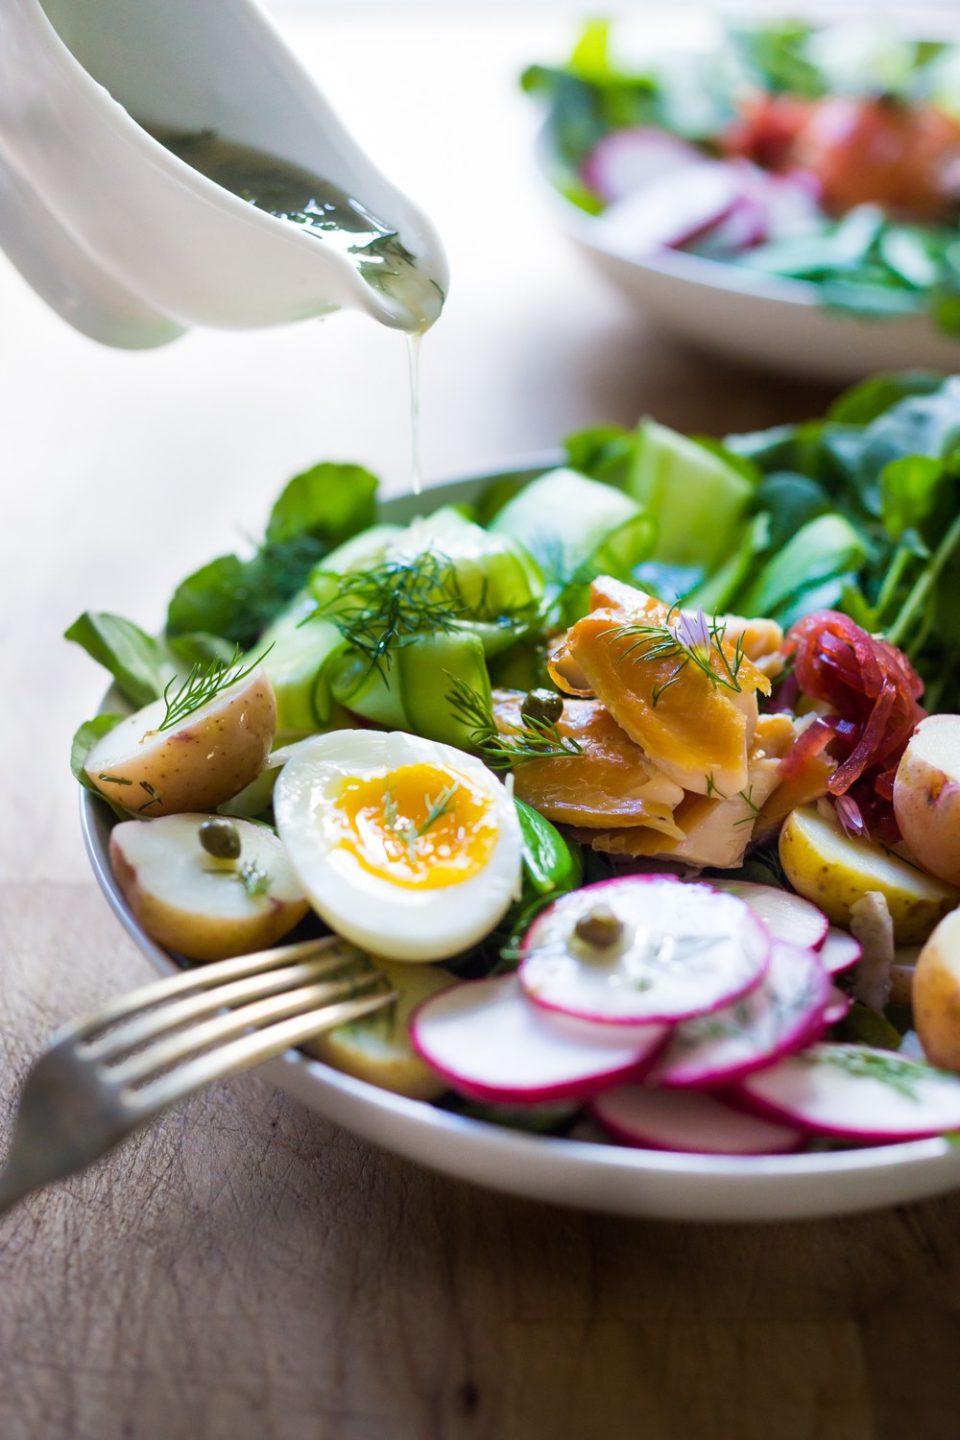 салат, скандинавский нисуаз, салат с овощами, салат с лососем, скандинавская кухня, легкий обед, scandinavian salad by Feasting at home